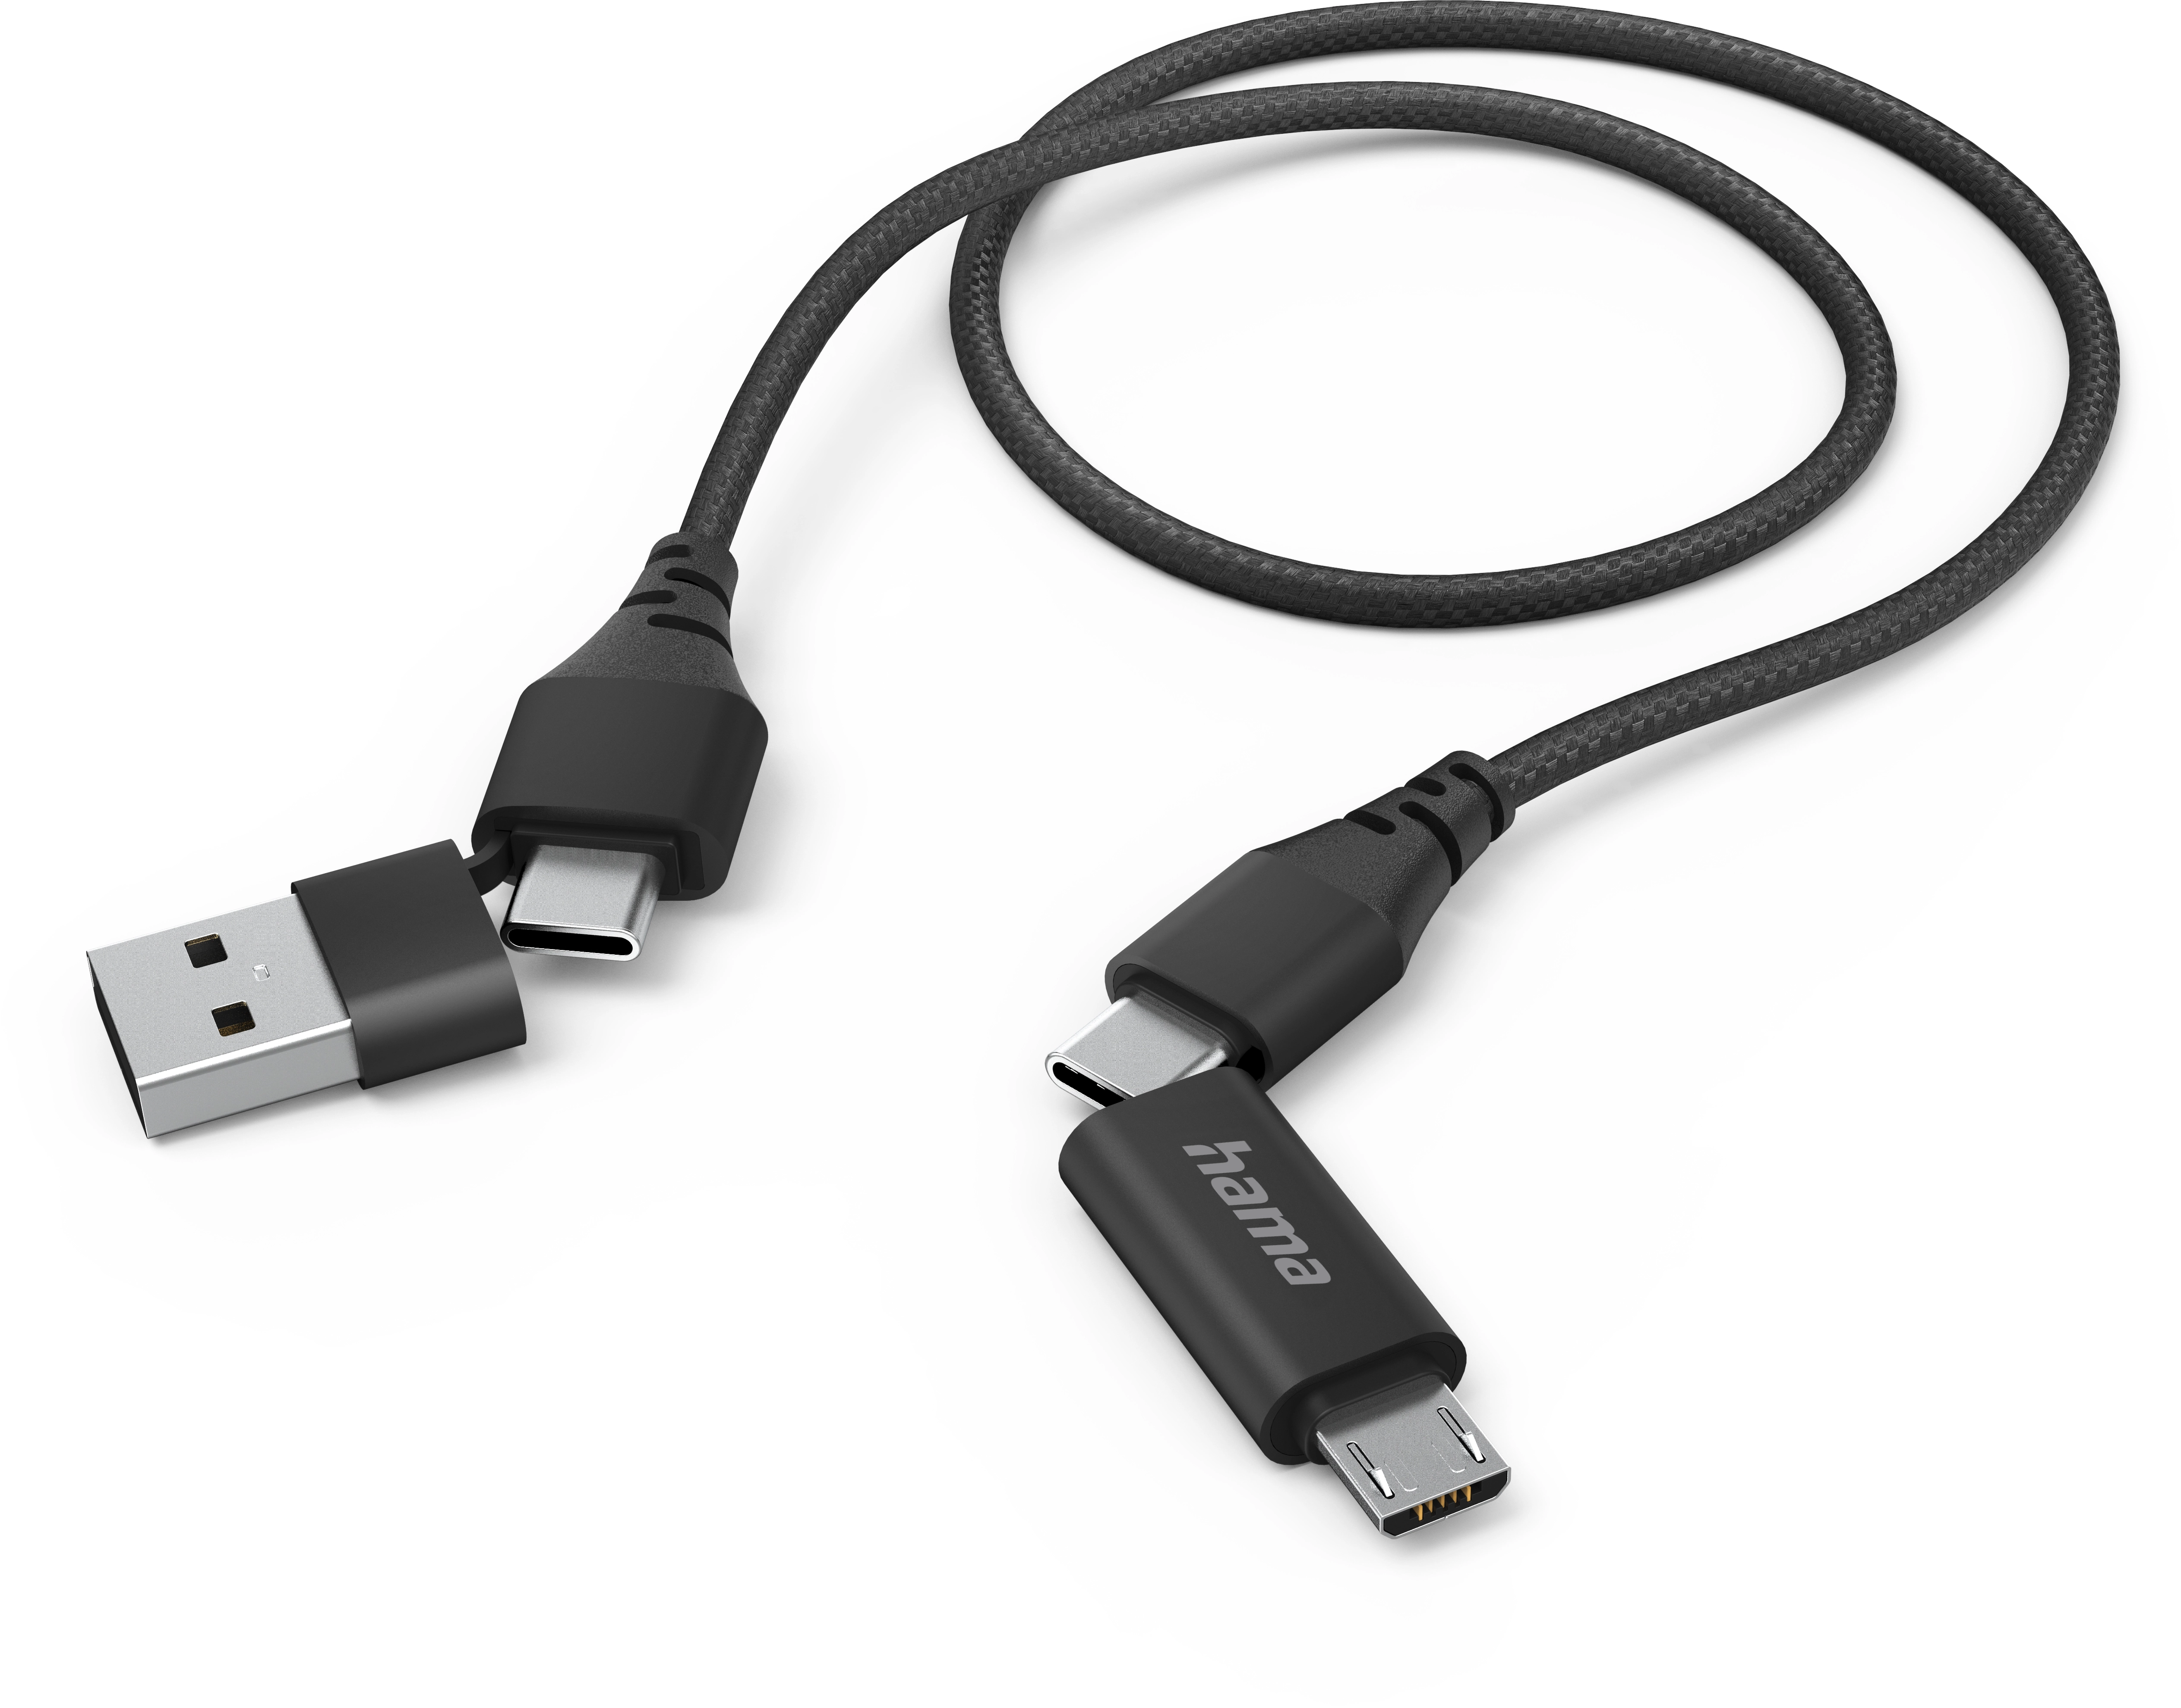 Hama USB Ladegerät für Kfz Universal 2,1 A kaufen bei OBI